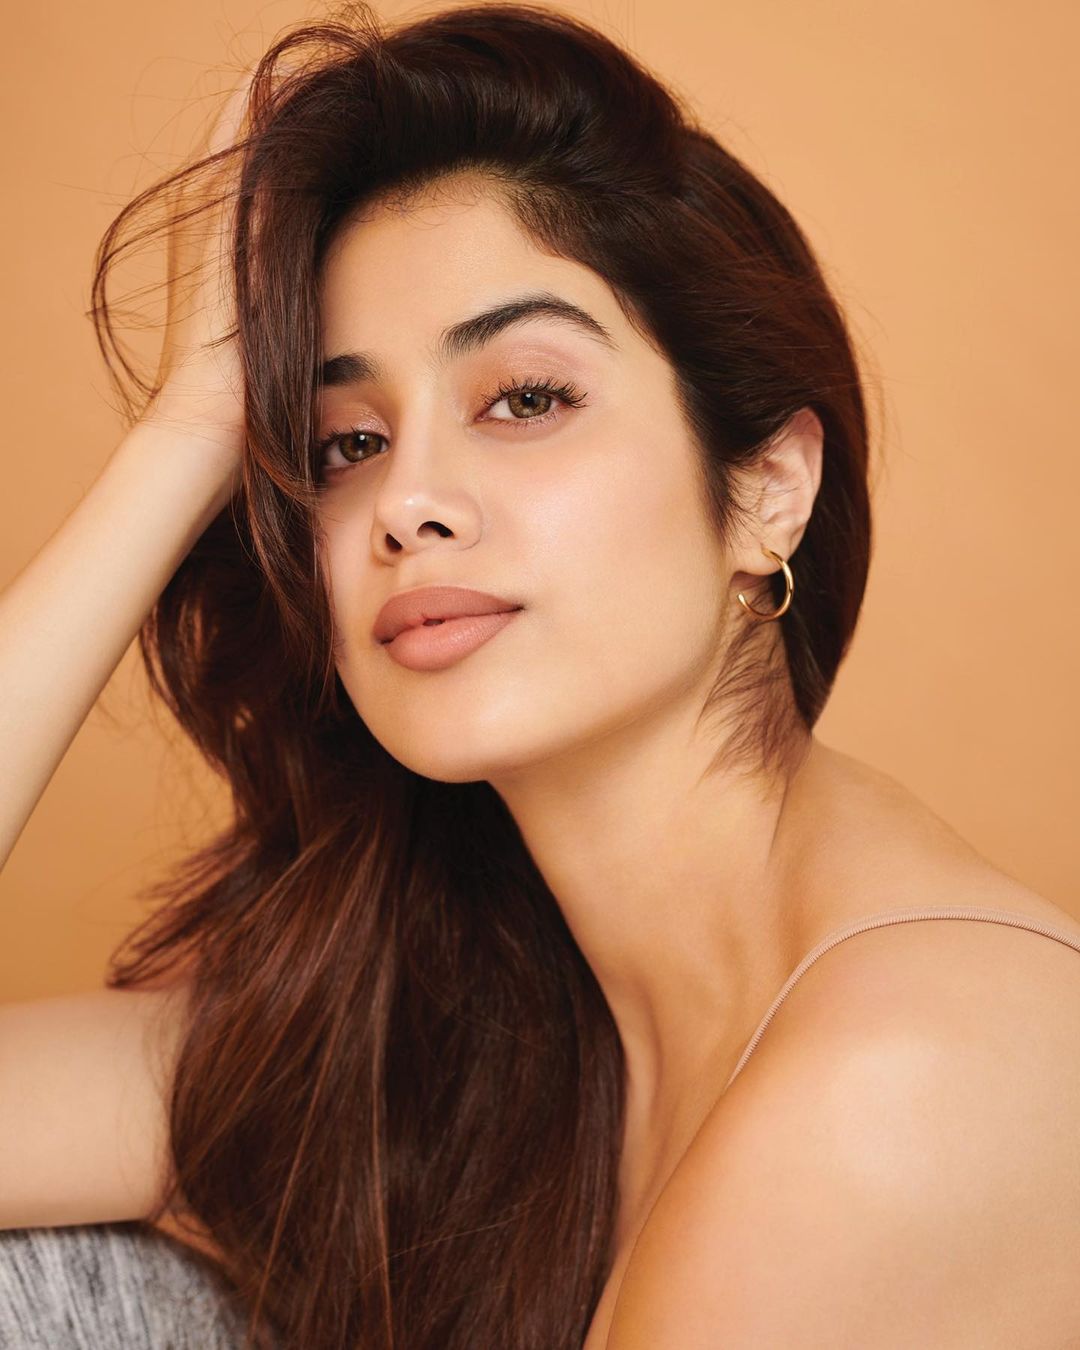  Janhvi Kapoor looks angelic in the nude lips. (Image: Instagram)